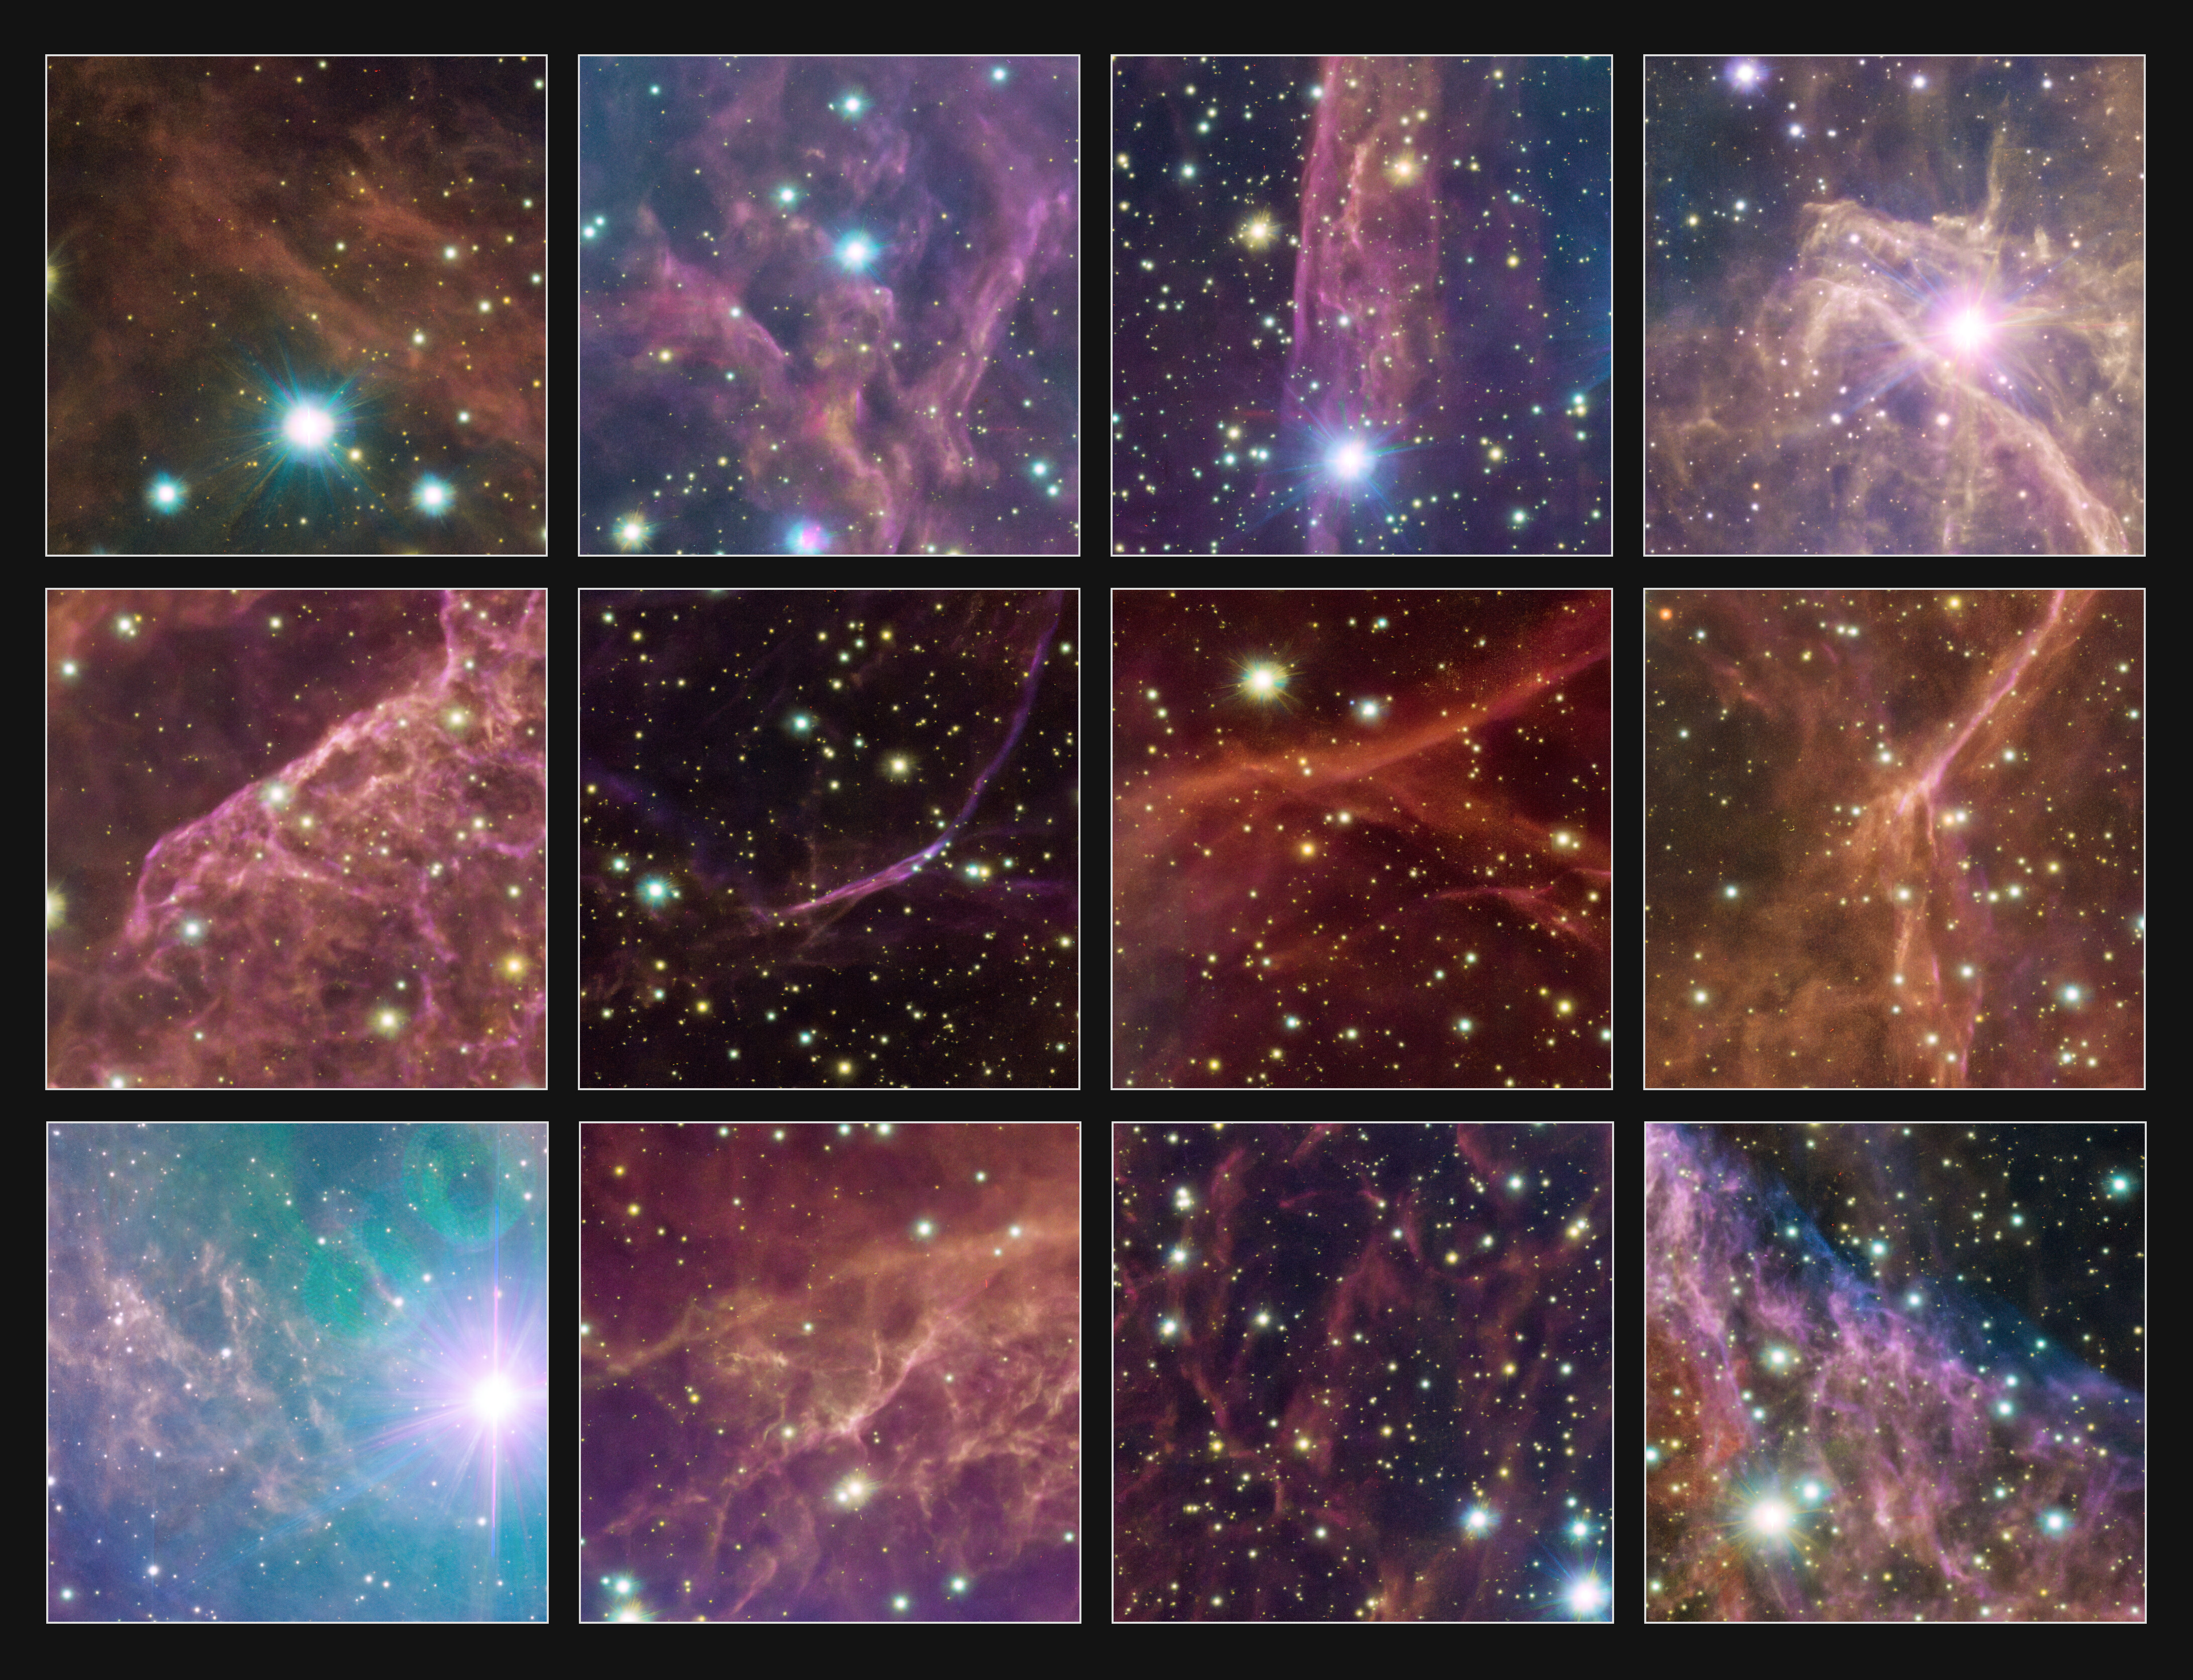 Highlights of the Vela supernova remnant